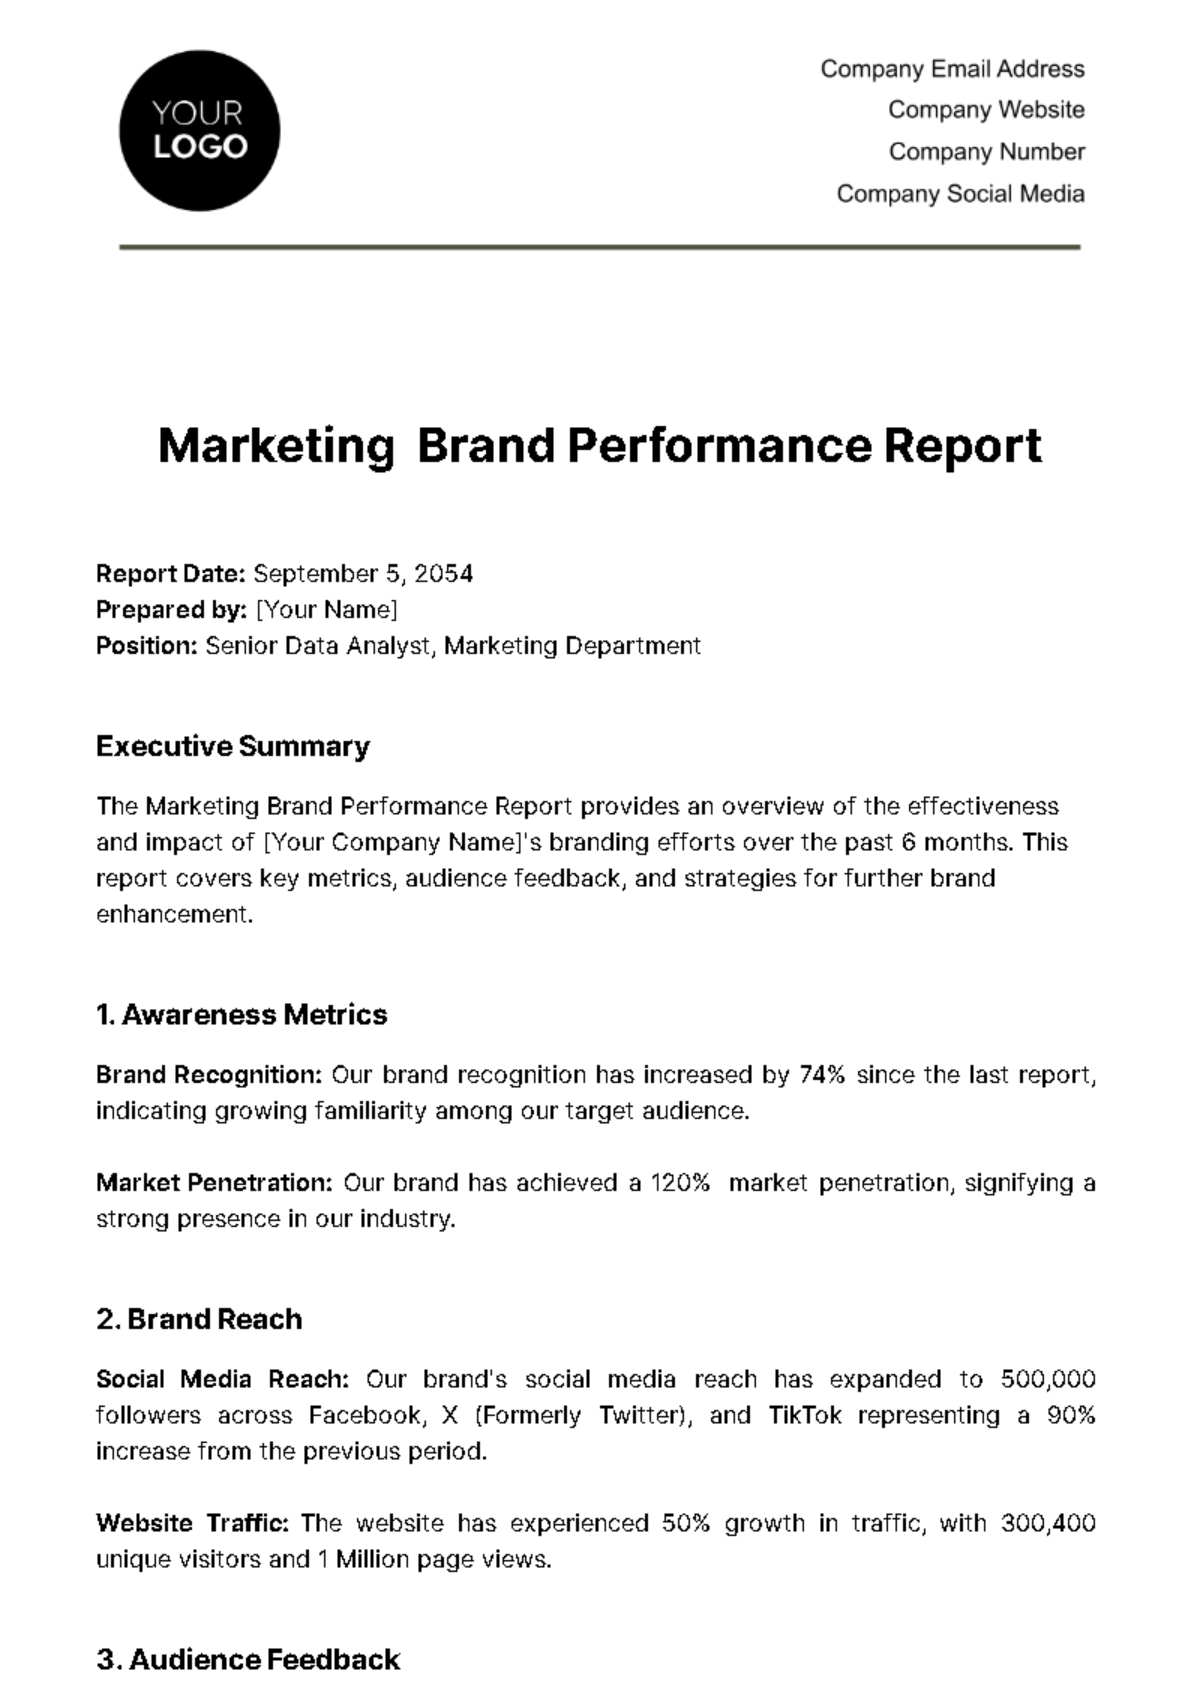 Marketing Brand Performance Report Template